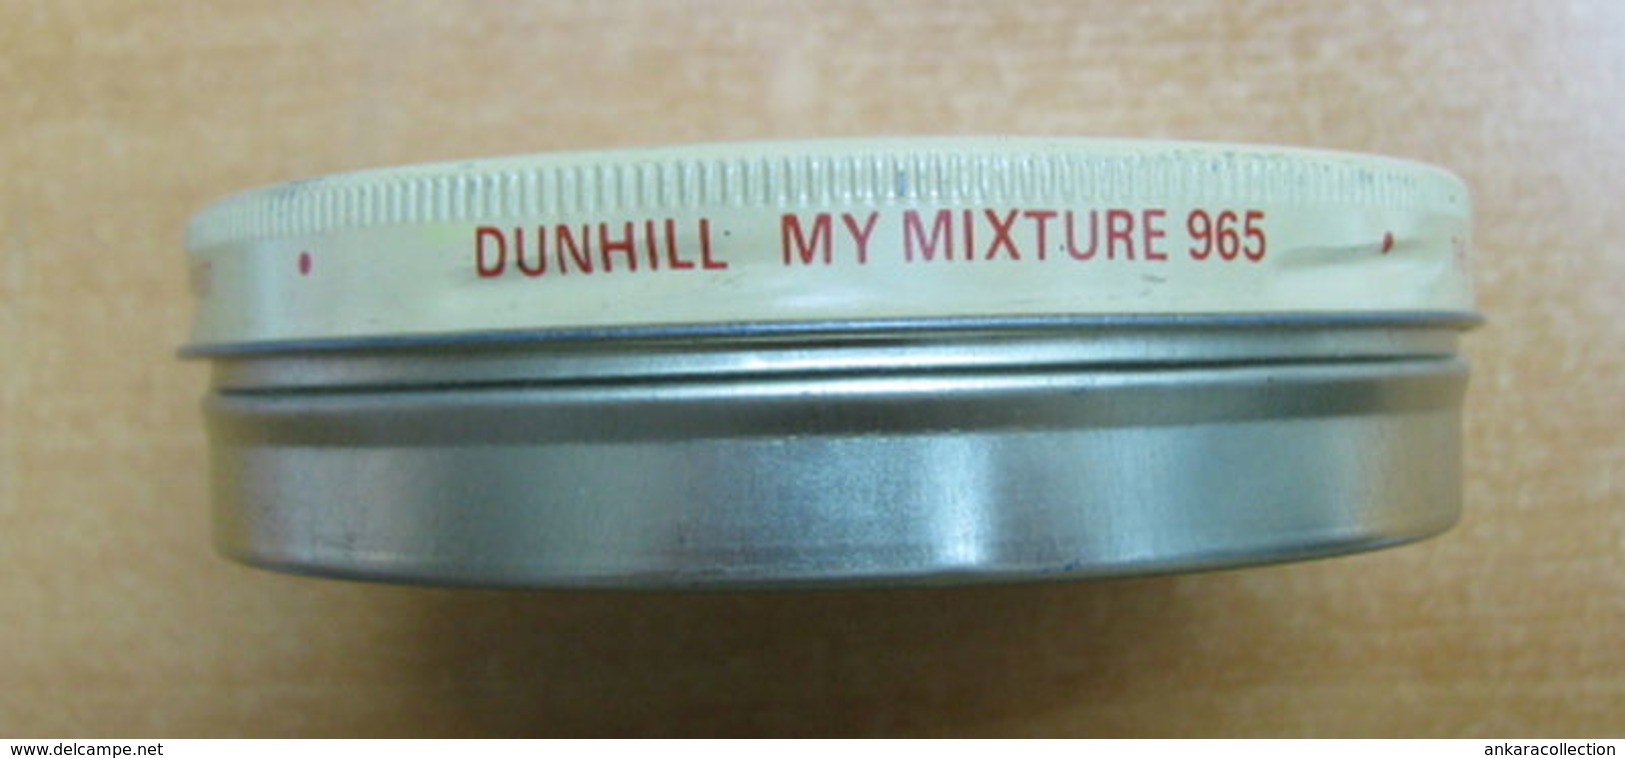 AC - DUNHILL MIXTURE 965 CIGARETE - TOBACCO EMPTY TIN BOX FINE CONDITION FOR COLLECTION - Schnupftabakdosen (leer)